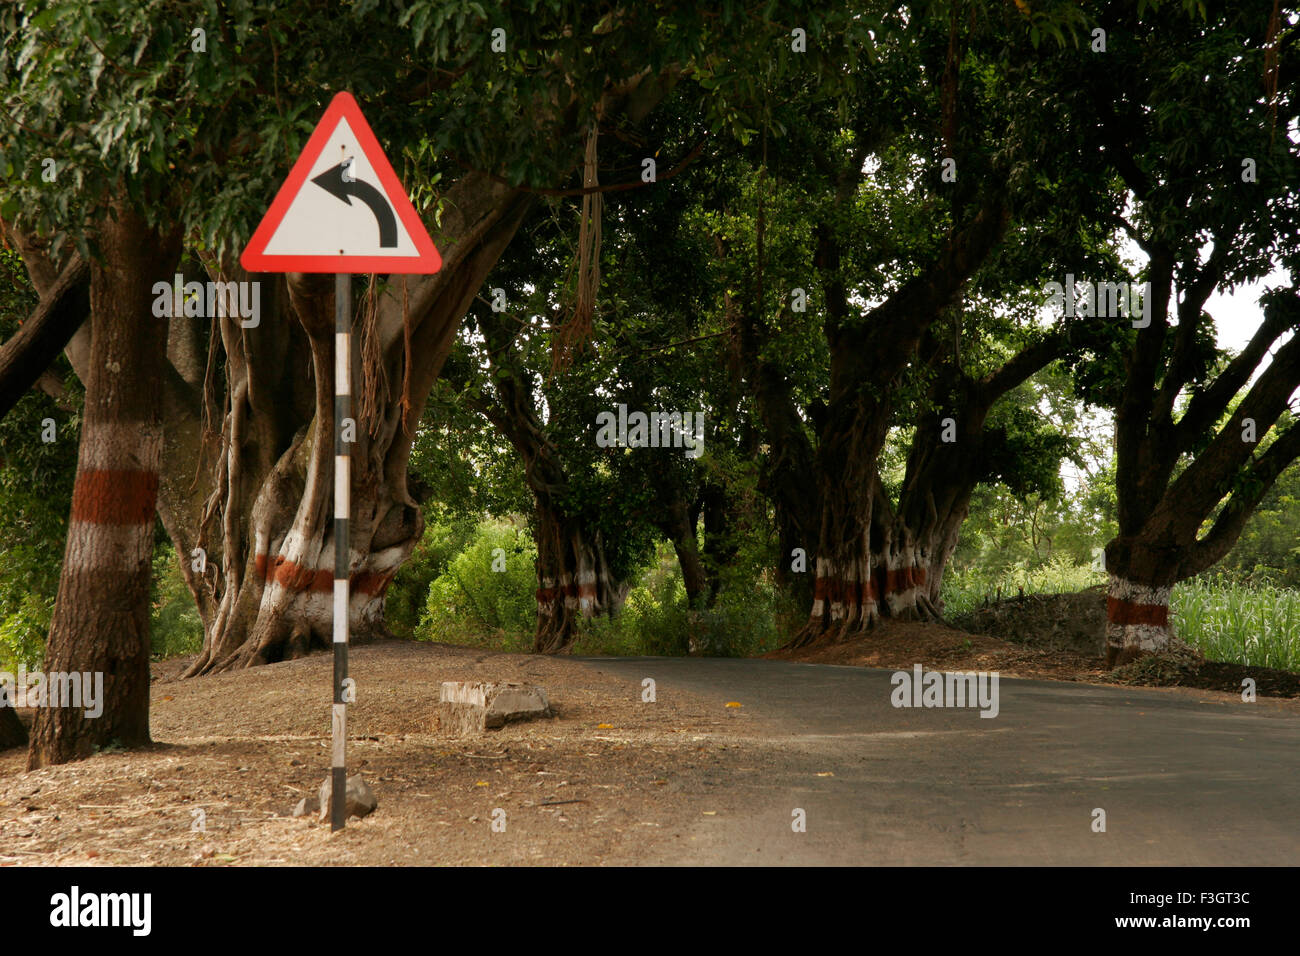 Señal de carretera que indica la izquierda en el camino de la WAI; Maharashtra, India Foto de stock